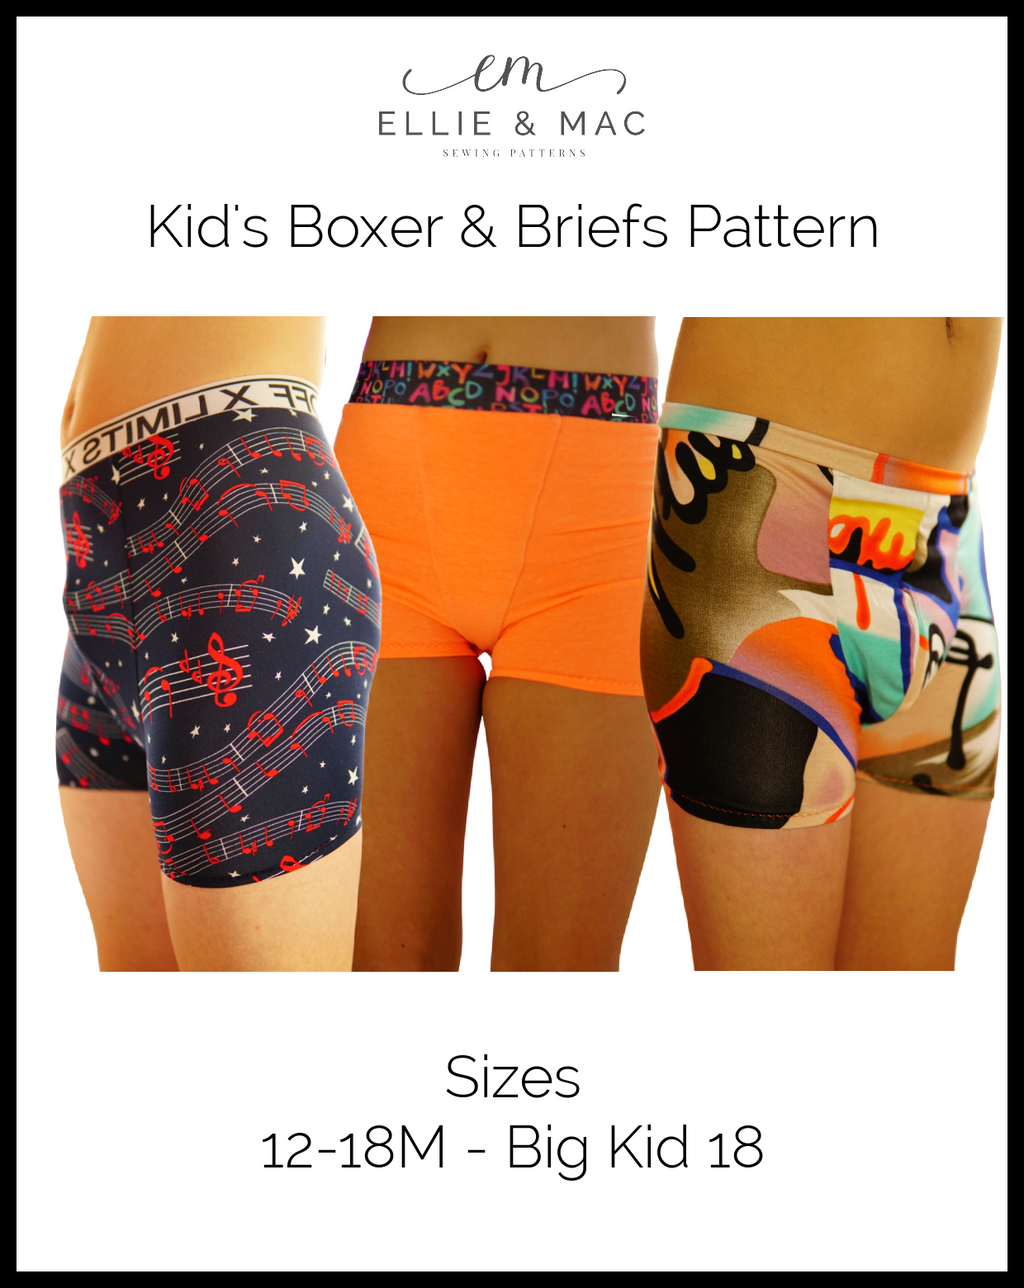 Second Life Marketplace - Girls Boxer Shorts - ON SALE! (Women's Underwear  - Wonderful Fun!) - 7 Colorful Plaid Boxers - Copy & Modify